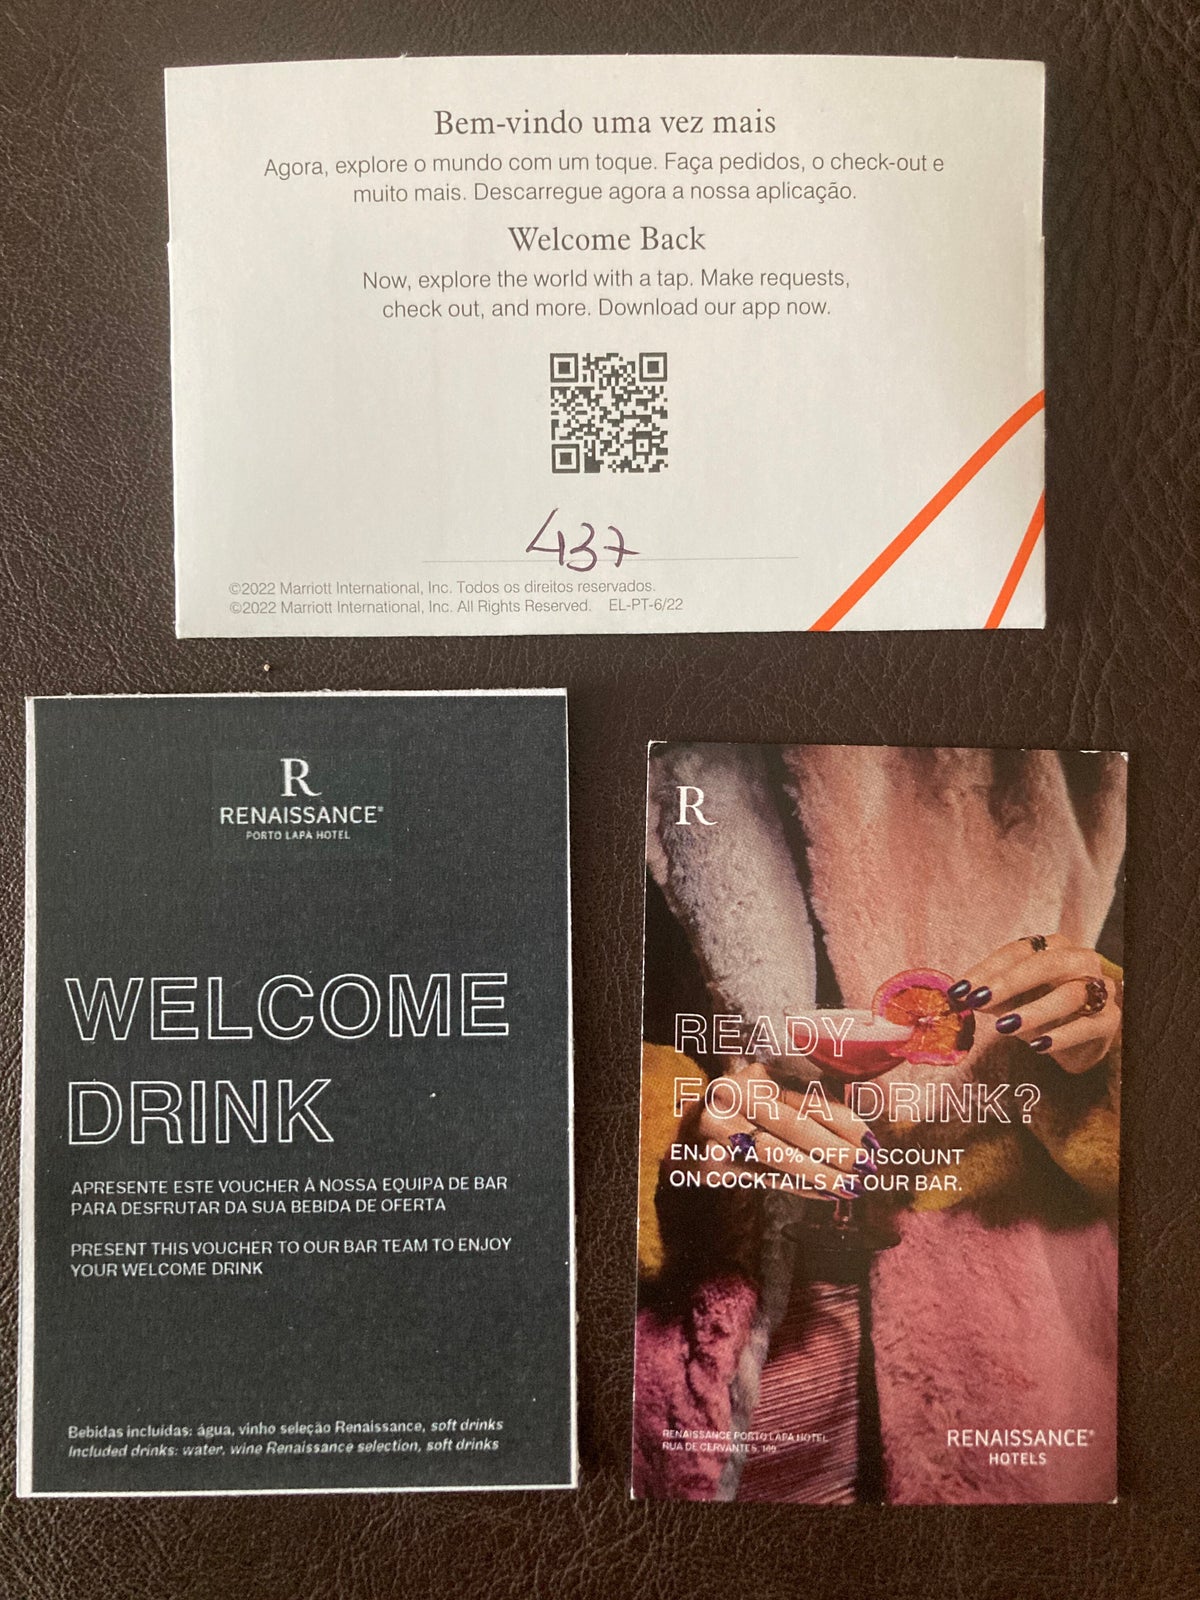 Renaissance Porto Lapa Hotel welcome drink coupon